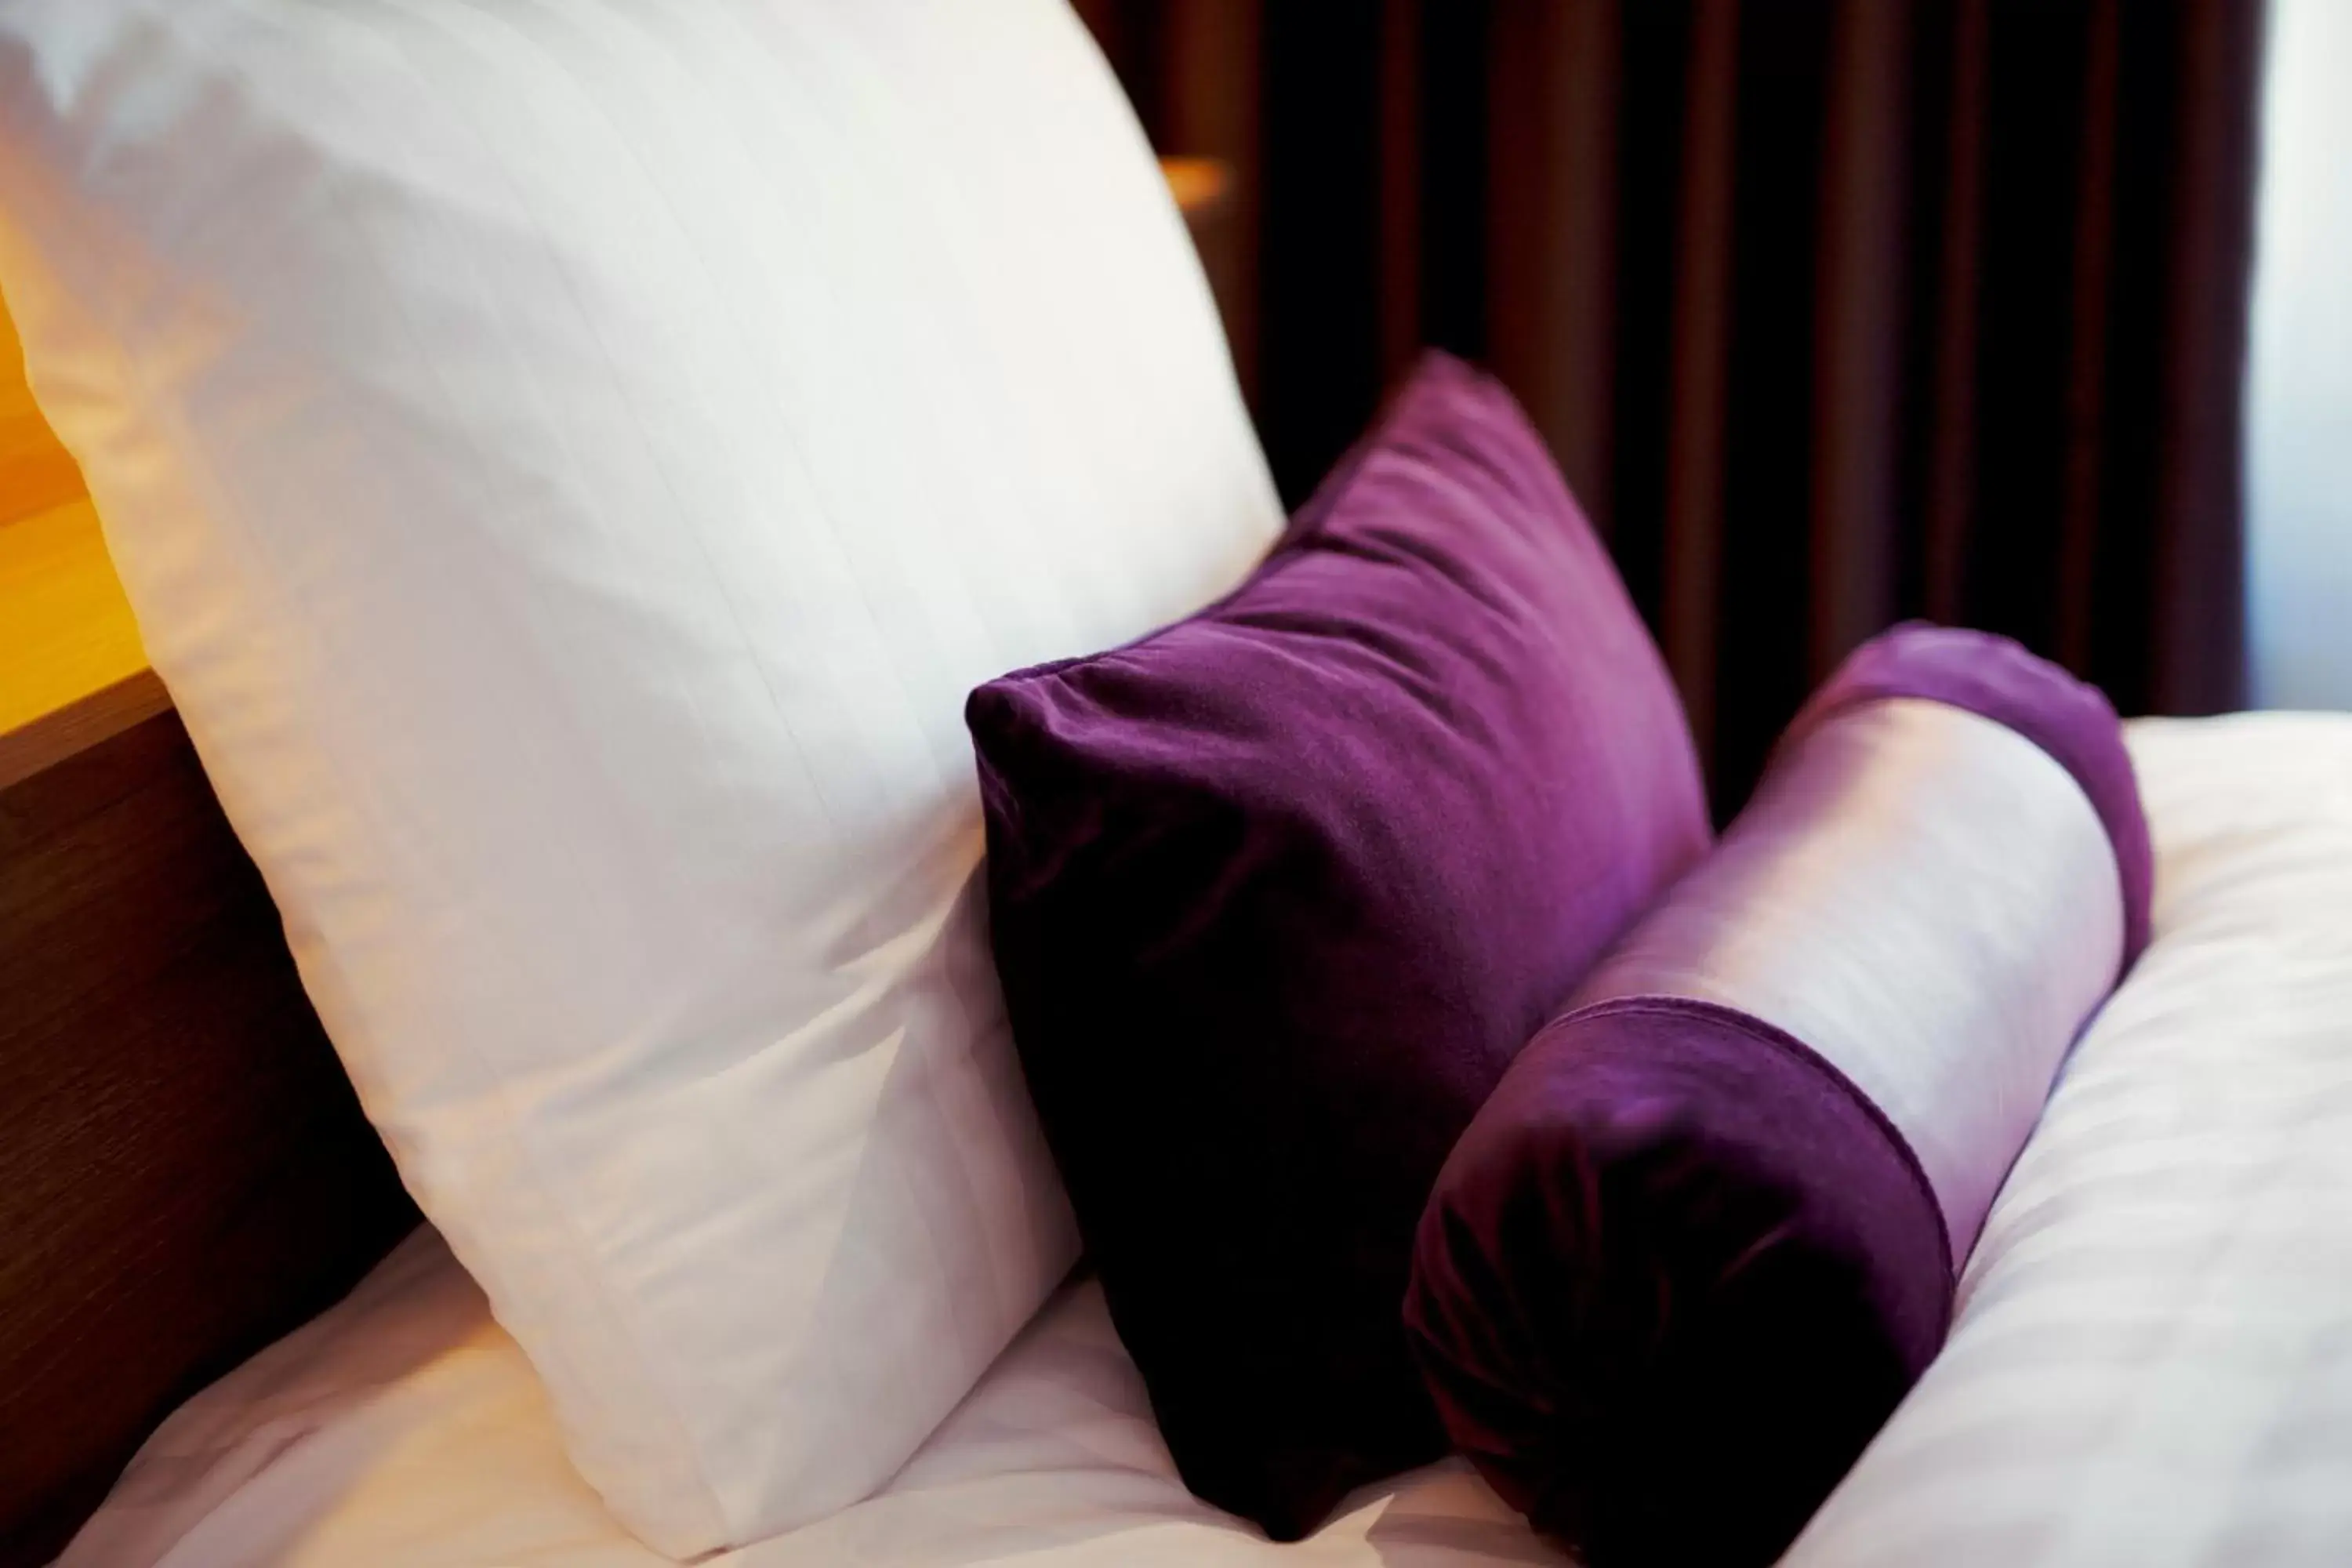 Bed in Dream Hotel Amsterdam